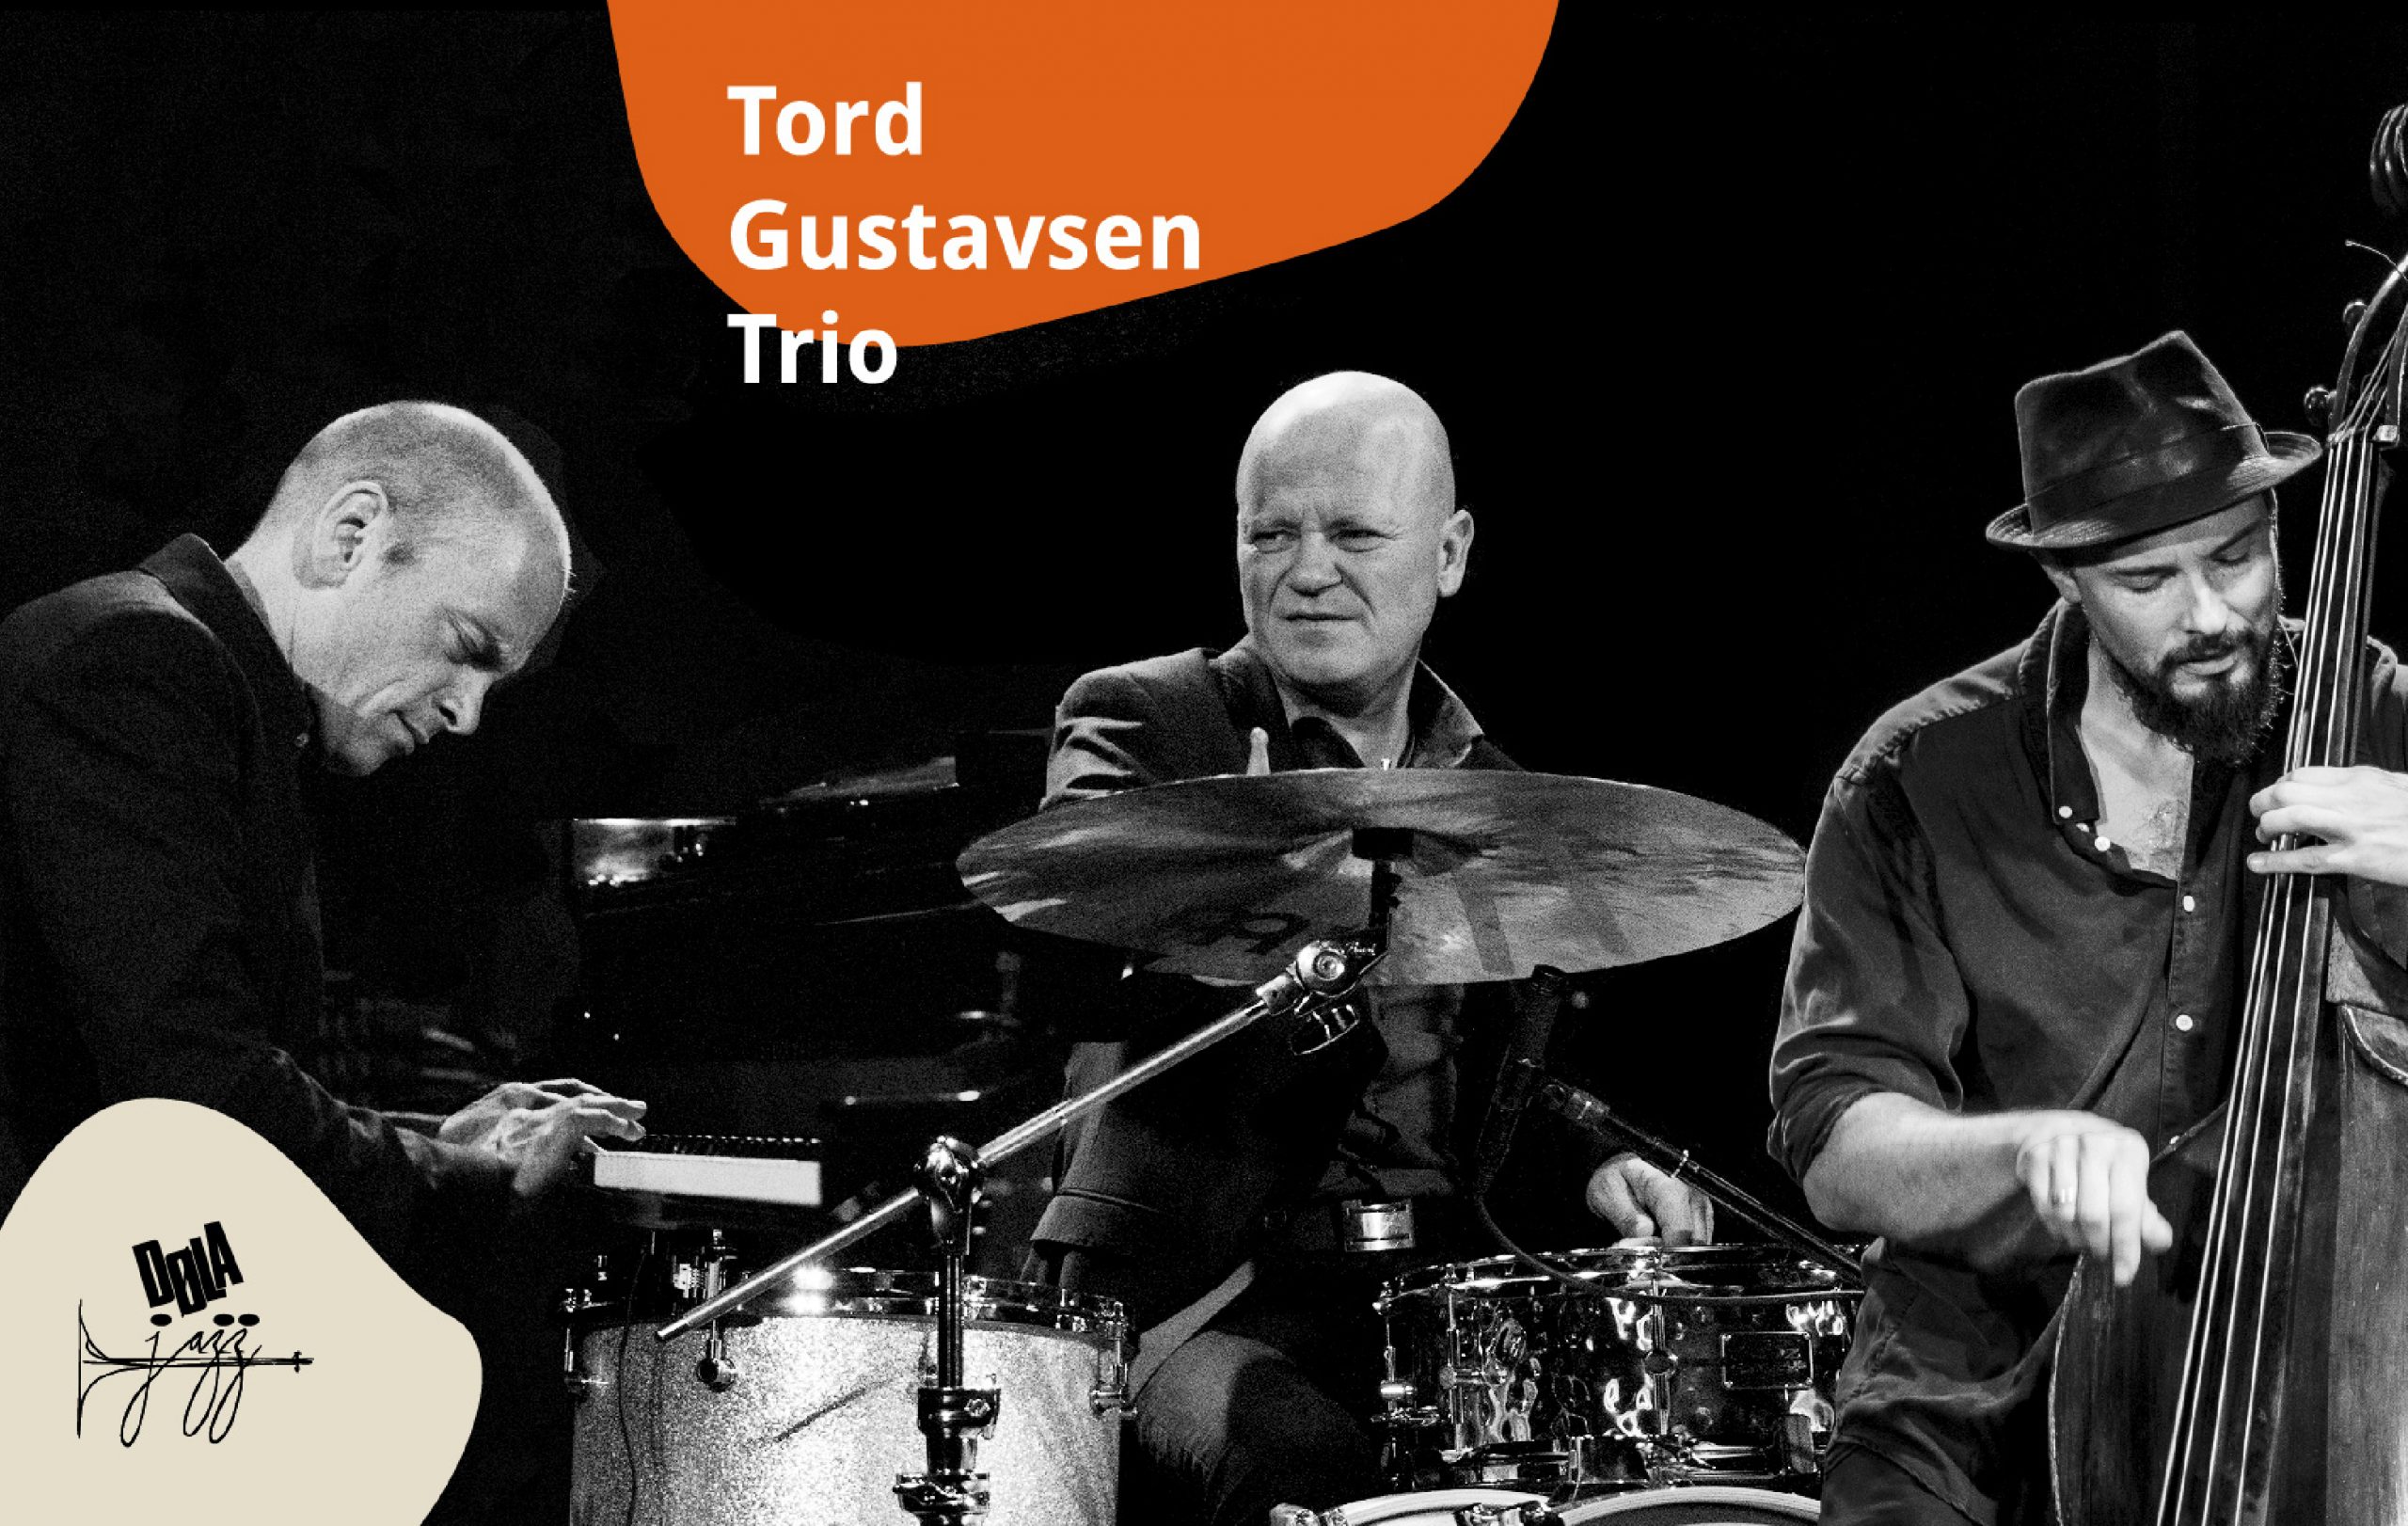 tord gustavsen tour dates